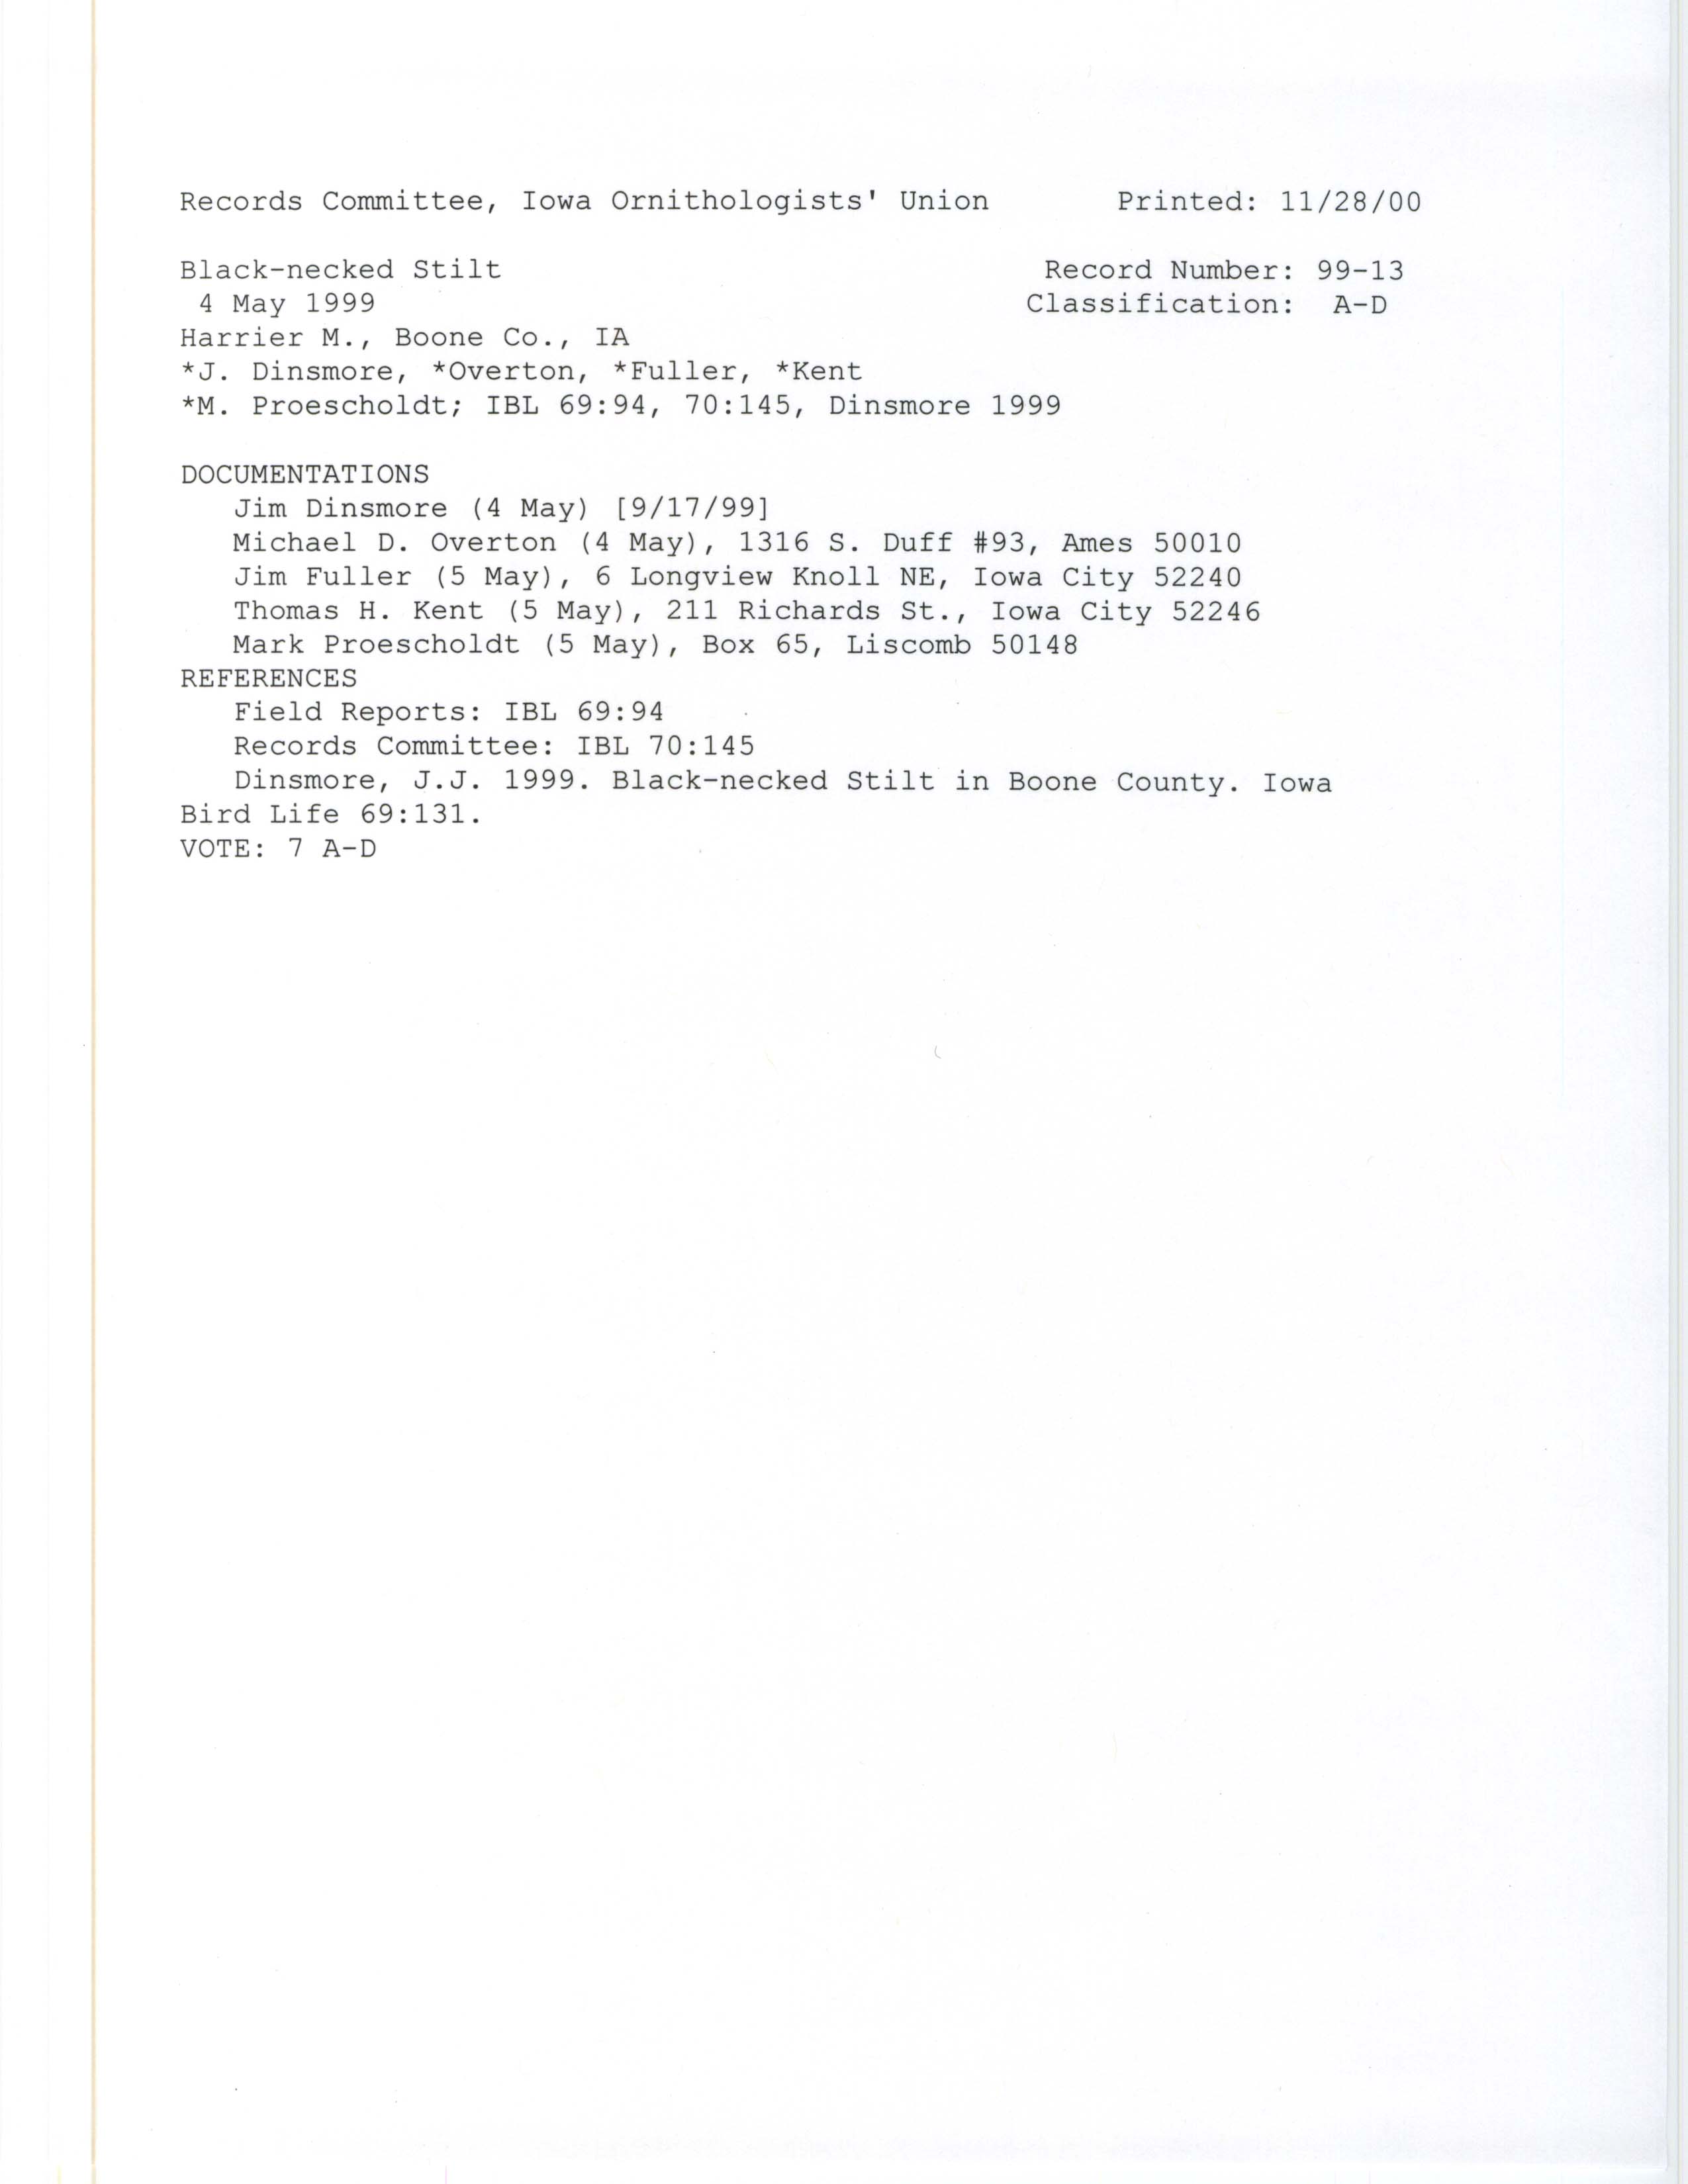 Records Committee review for rare bird sighting of Black-necked Stilt at Harrier Marsh, 1999